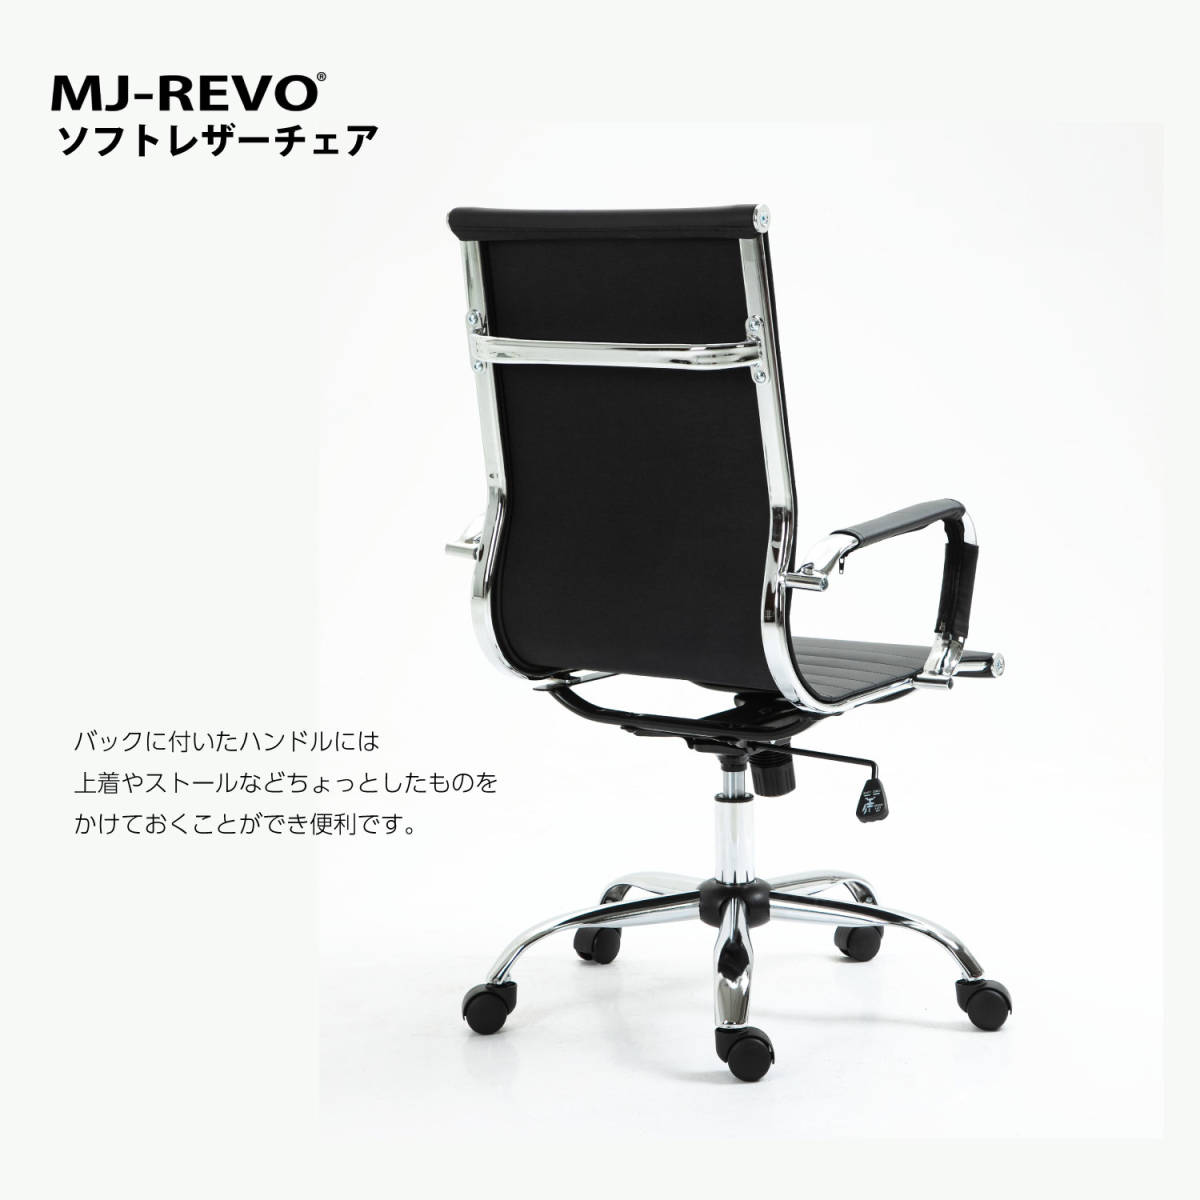  free shipping full automation mah-jong table optimum stylish design MJ-REVO chair black soft leather chair black 4 legs set height adjustment possibility 